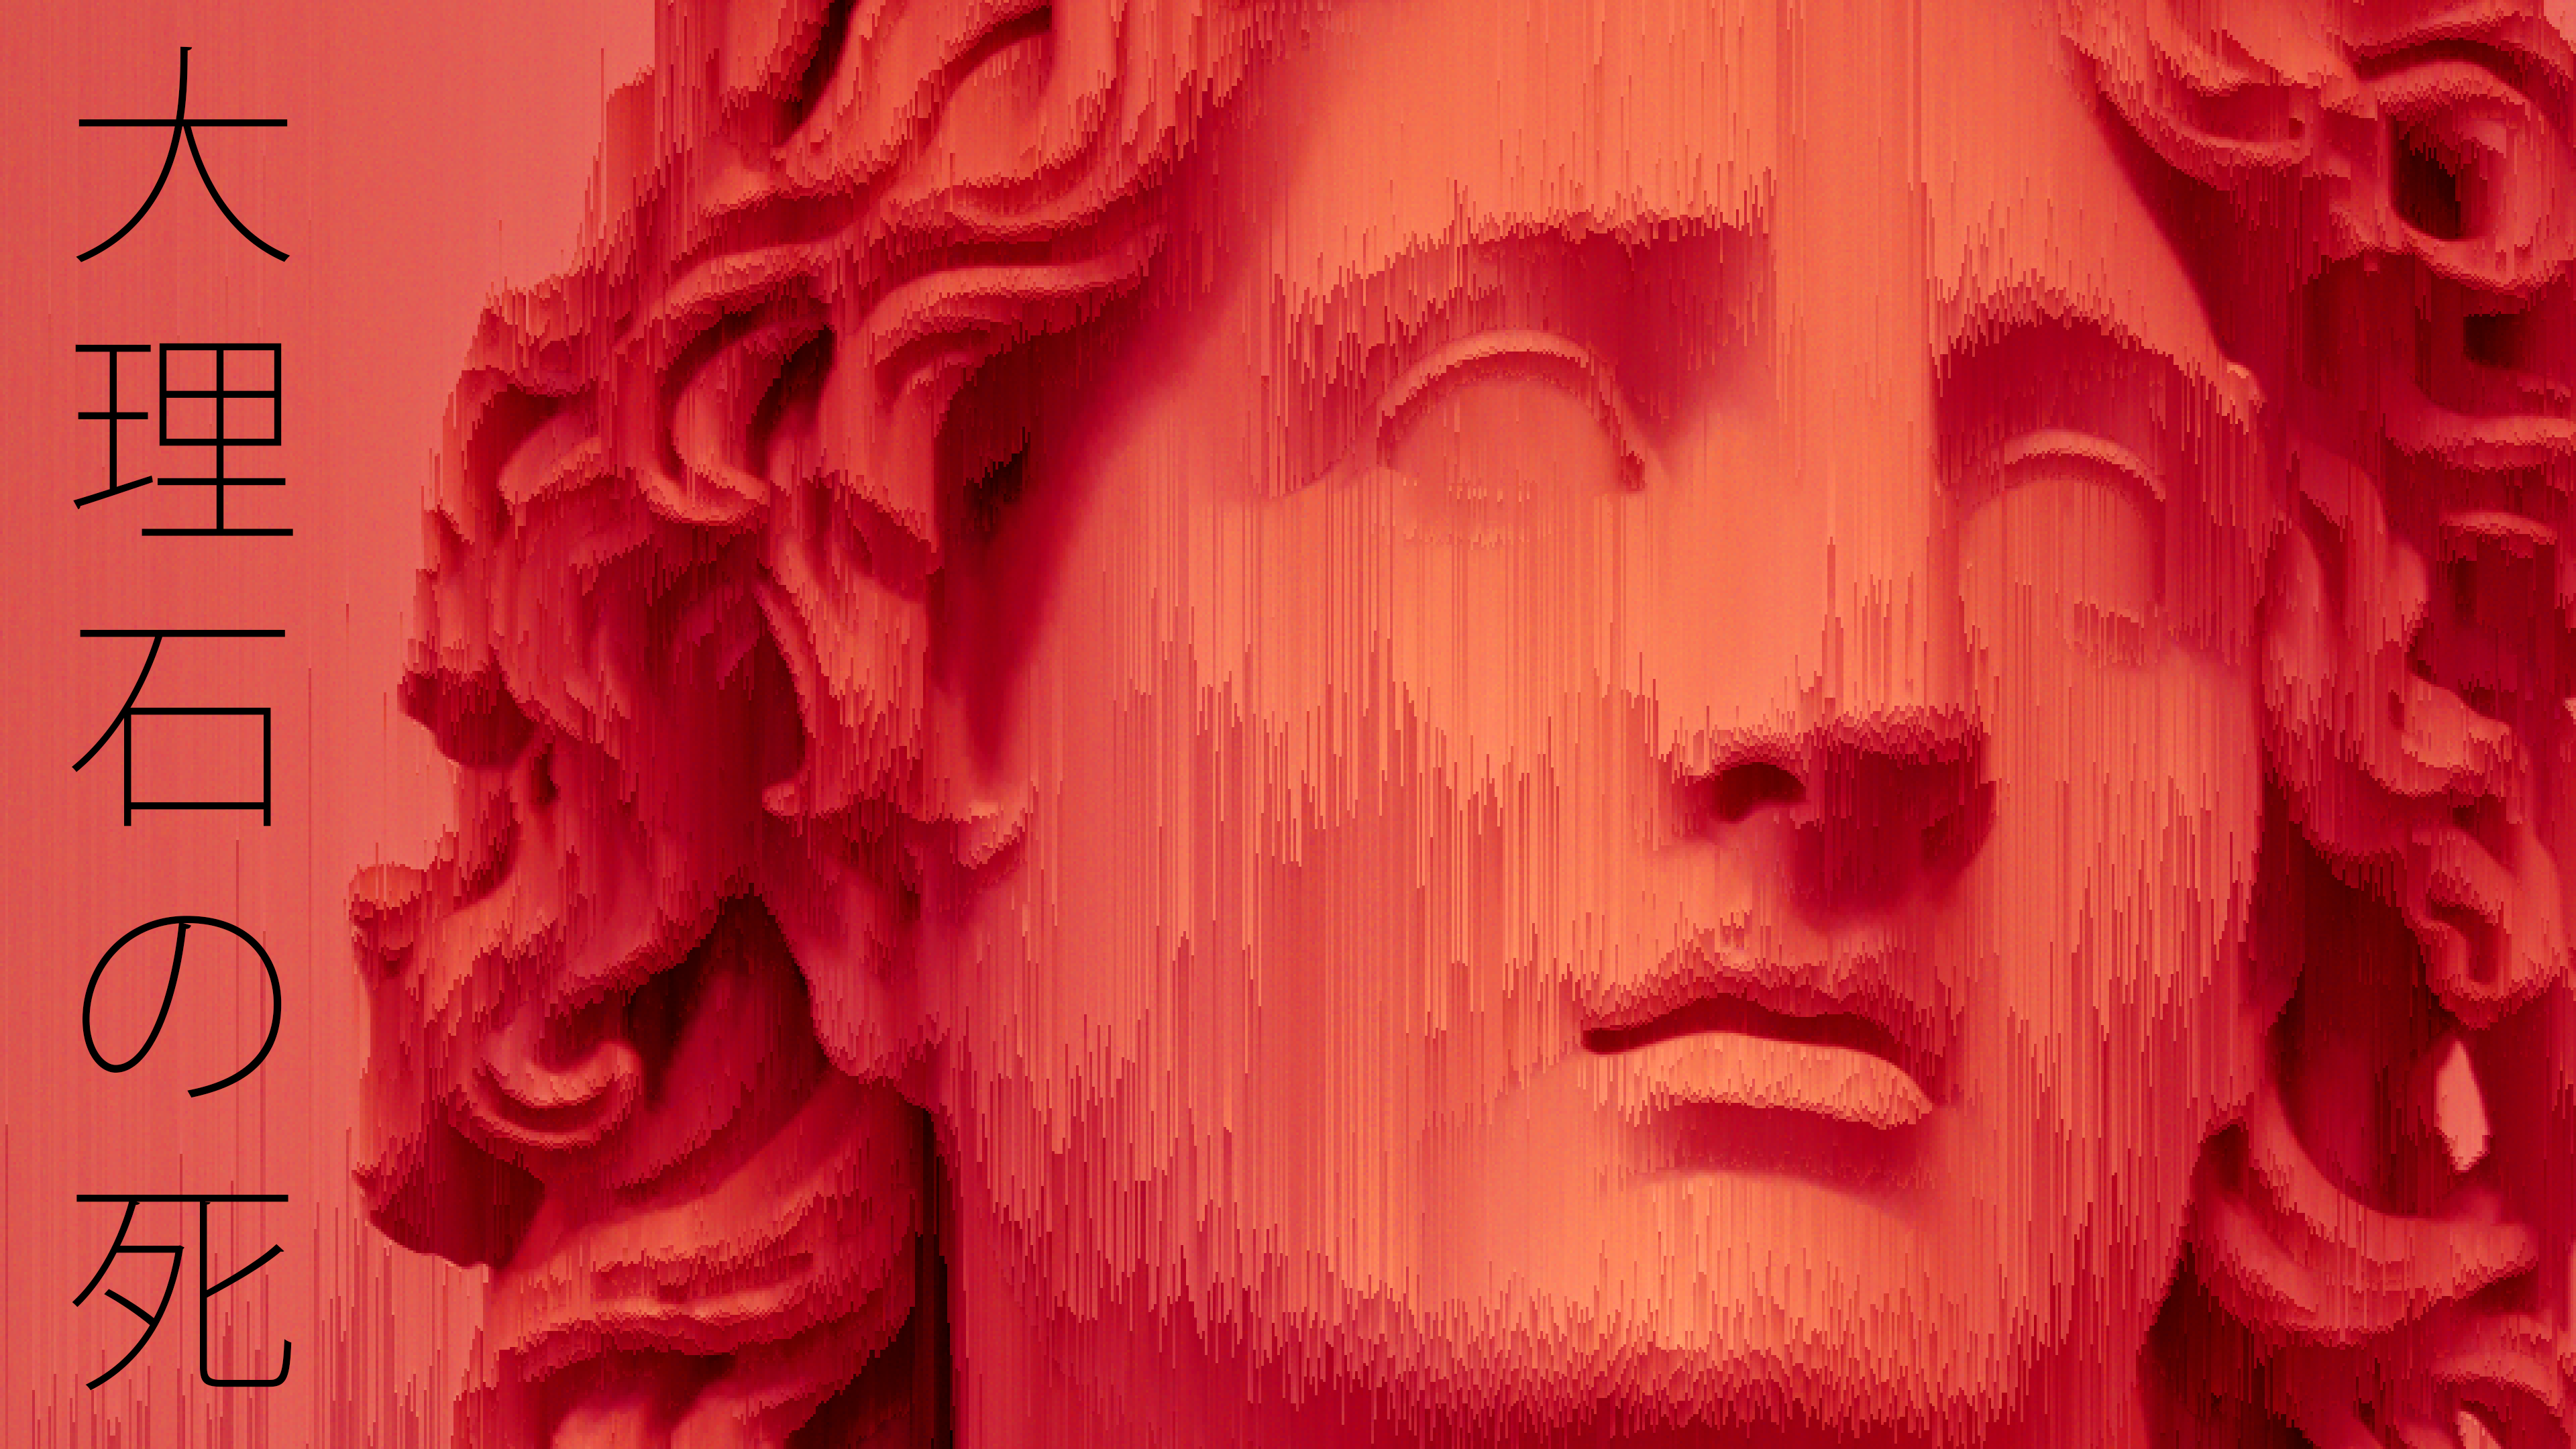 General 3840x2160 statue glitch art vaporwave voxels red digital art closeup